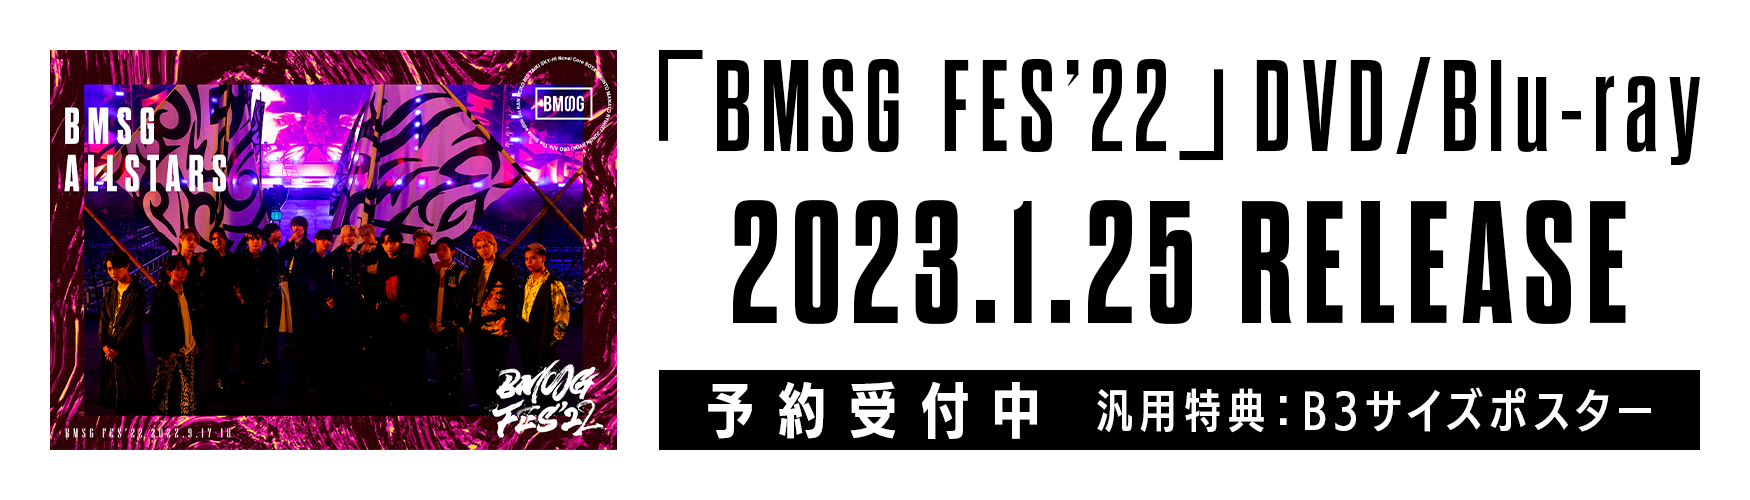 BMSG FES'22 DVD/Blu-ray 2023.1.25 RELEASE 予約受付中！